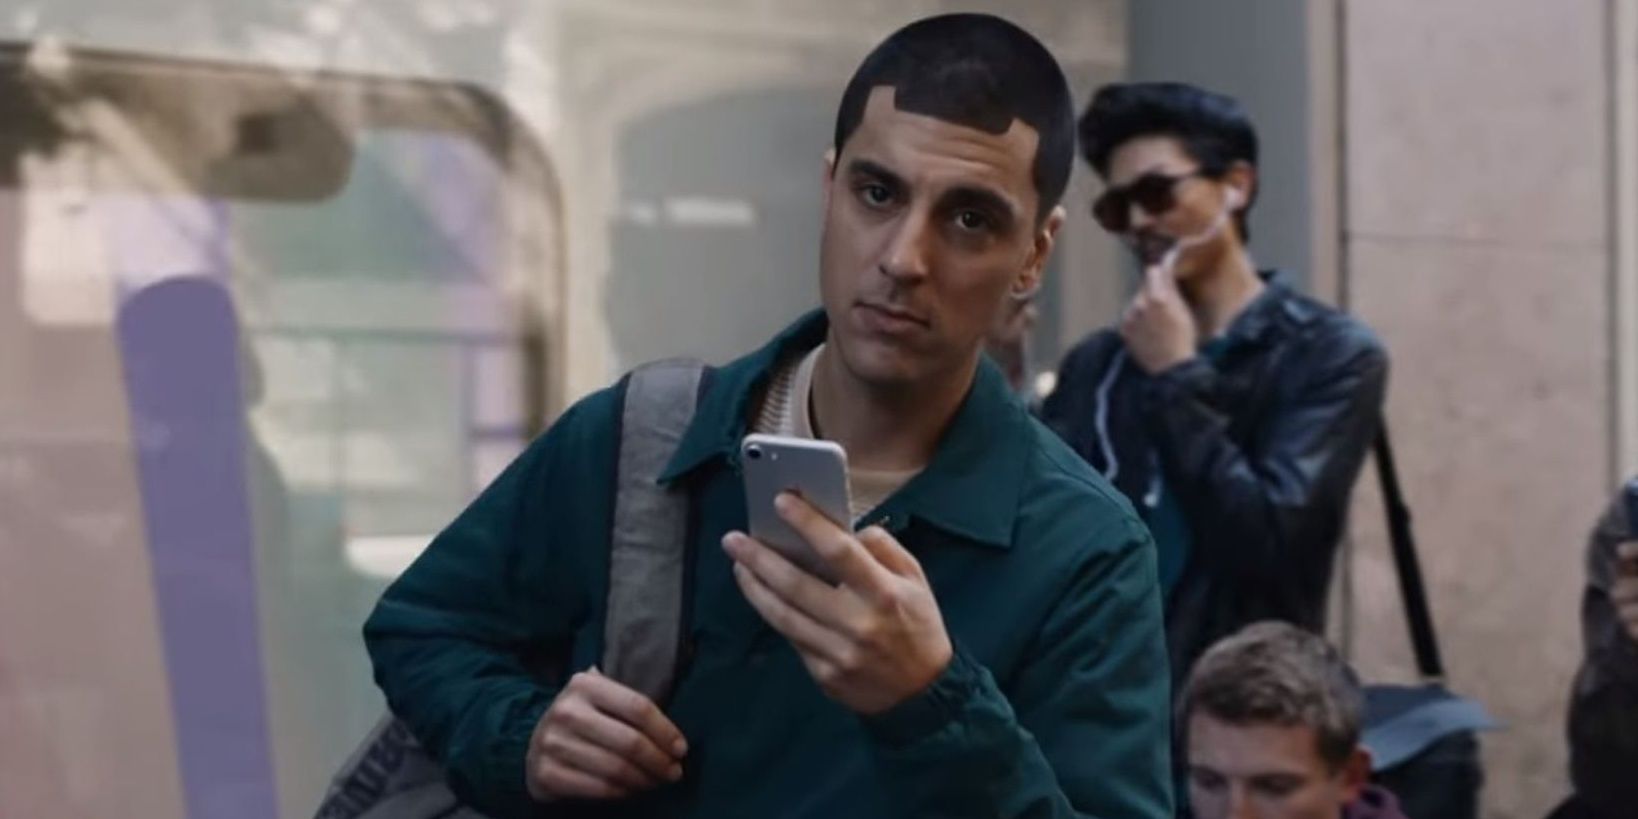 Samsung mocks Apple's notch in commercial 